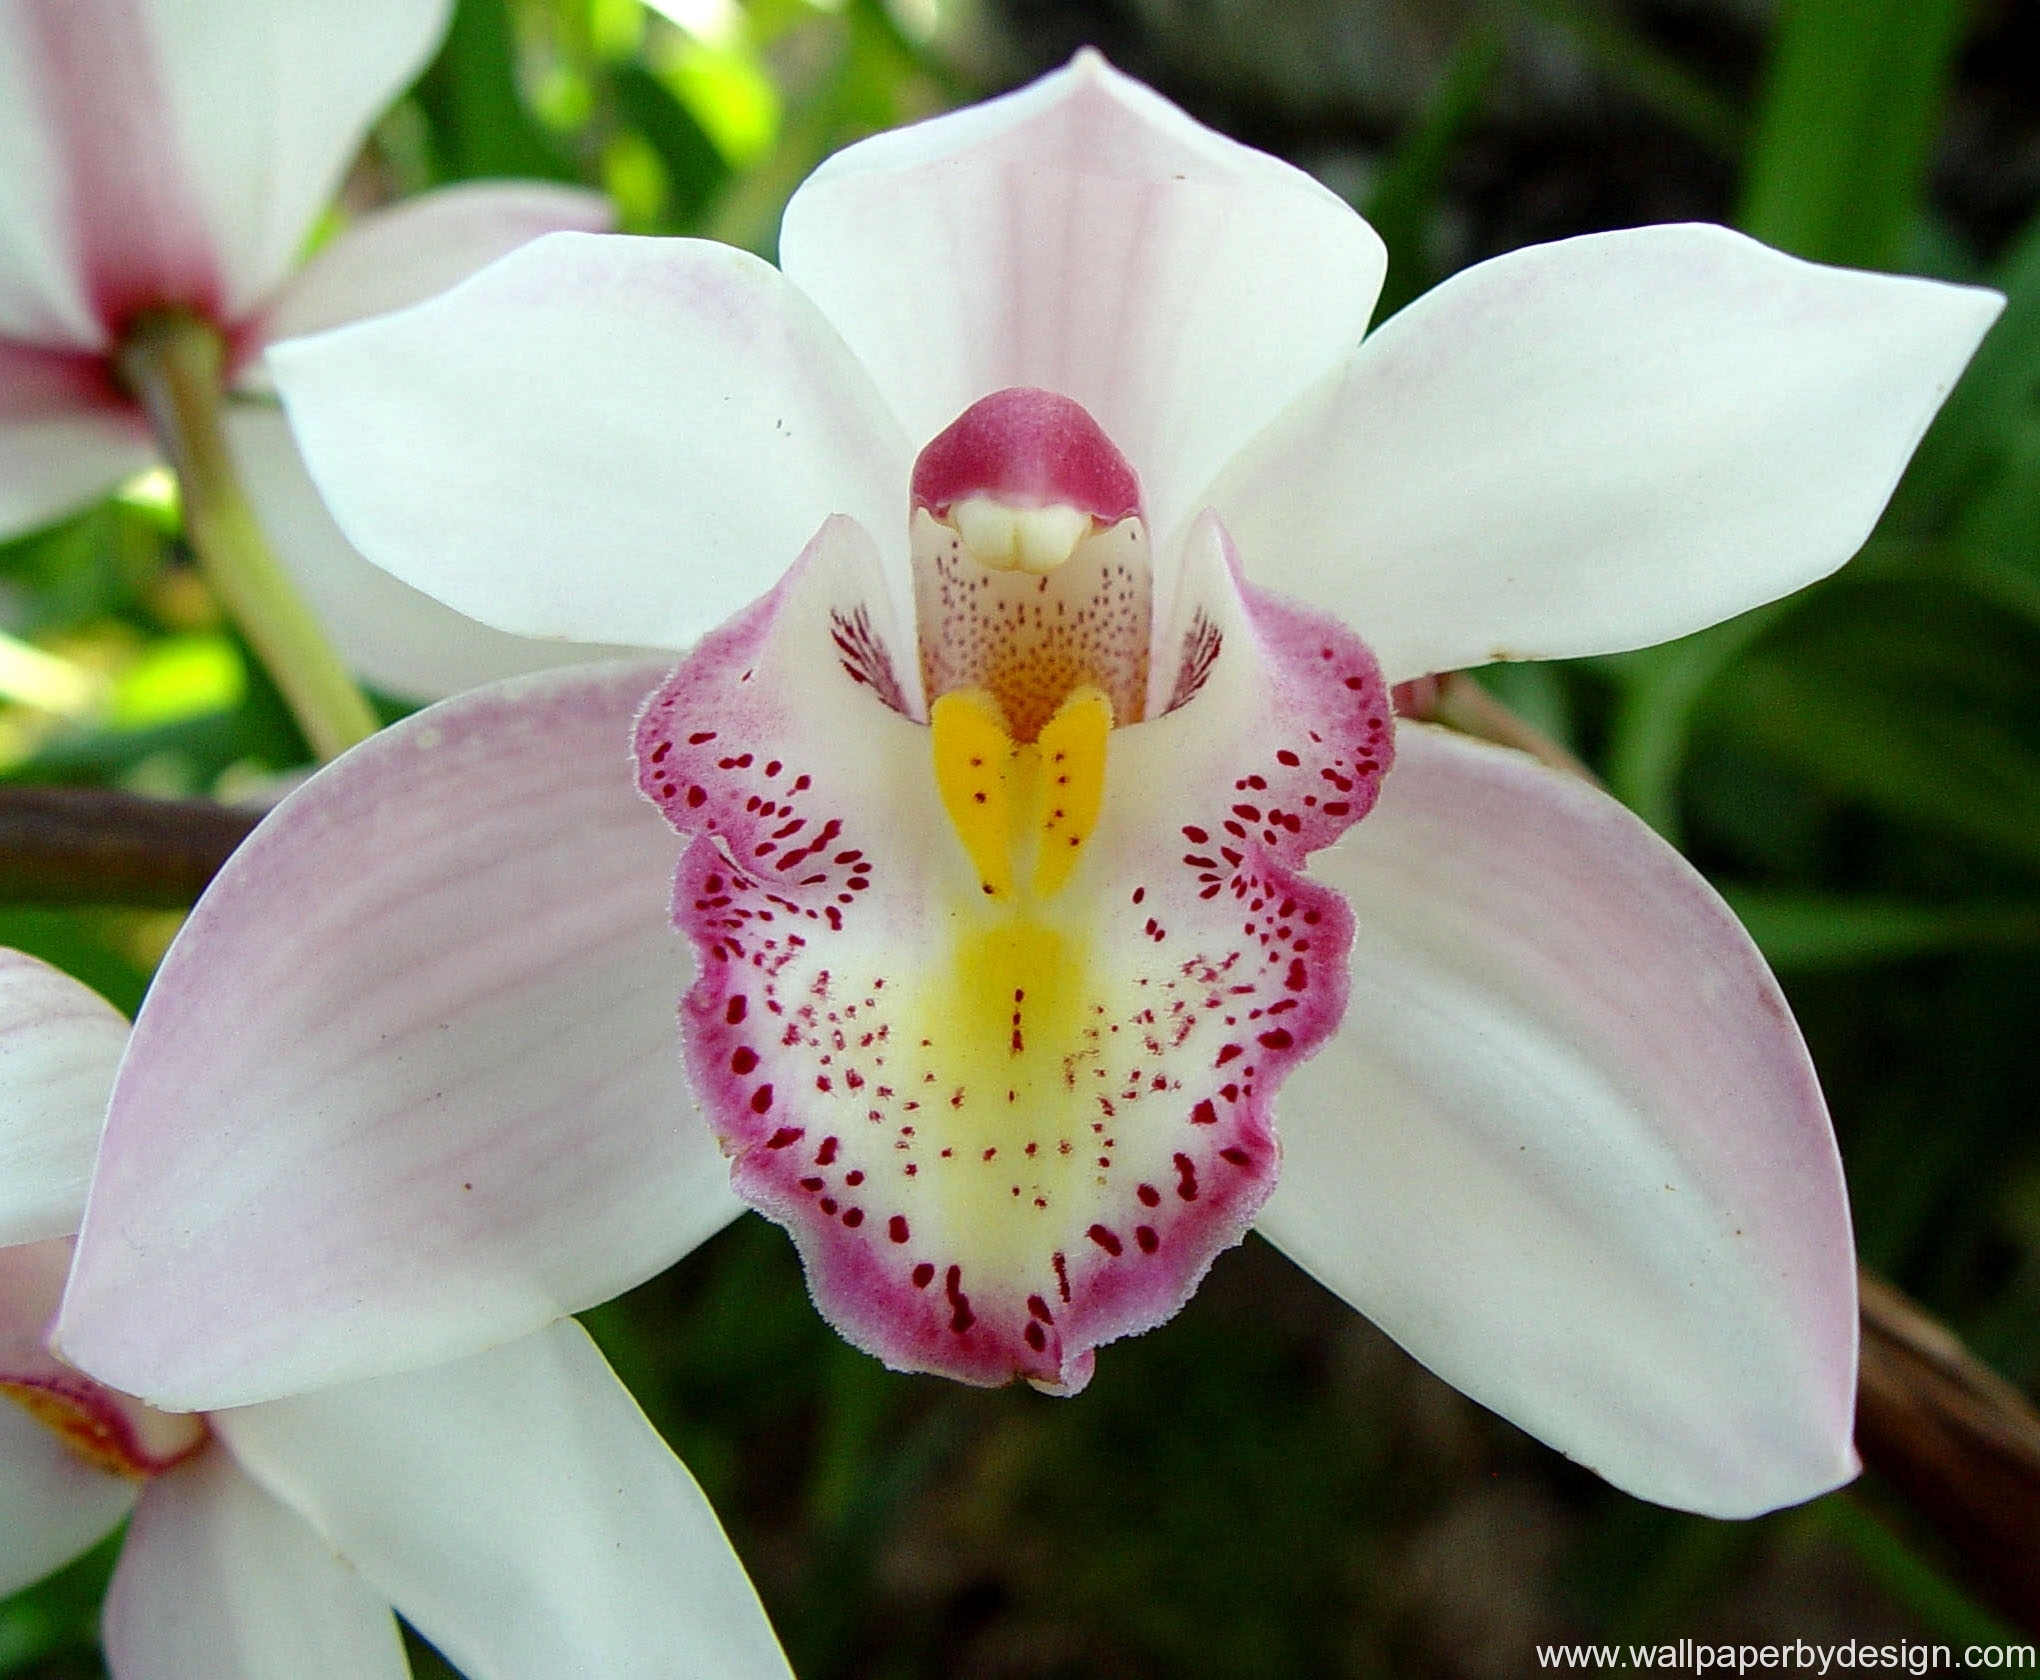 Flowers orchids. Орхидея Шэньчжэнь-Нонгке. Орхидея Цимбидиум. Орхидея Шэньчжэнь-Нонгке (Shenzhen Nongke Orchid).